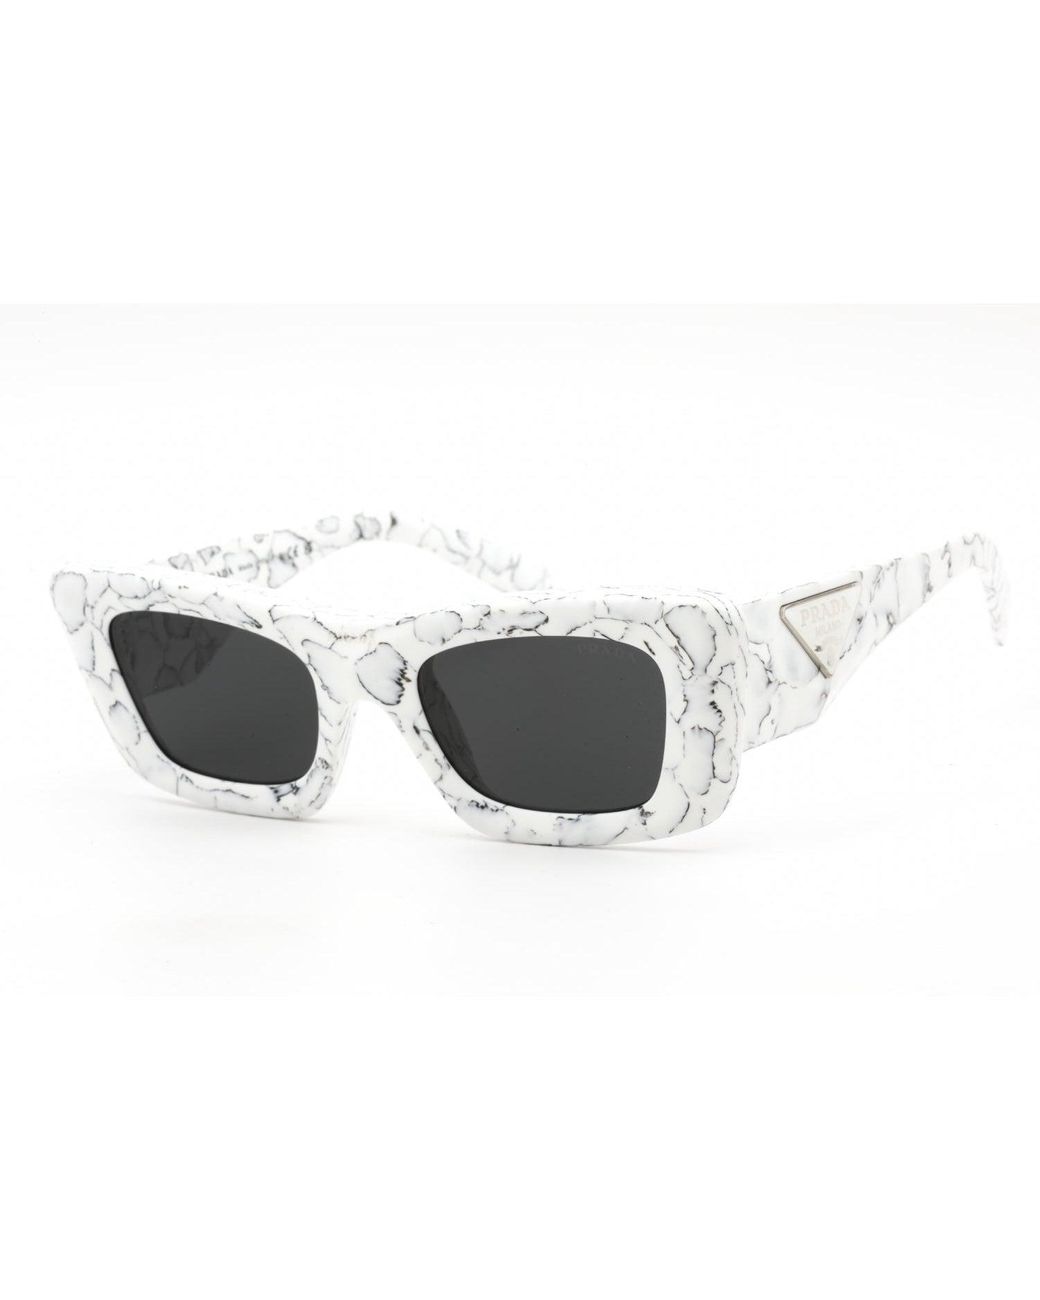 Prada PR 14ZS 50 Polar Dark Grey & Baltic Marble Polarized Sunglasses